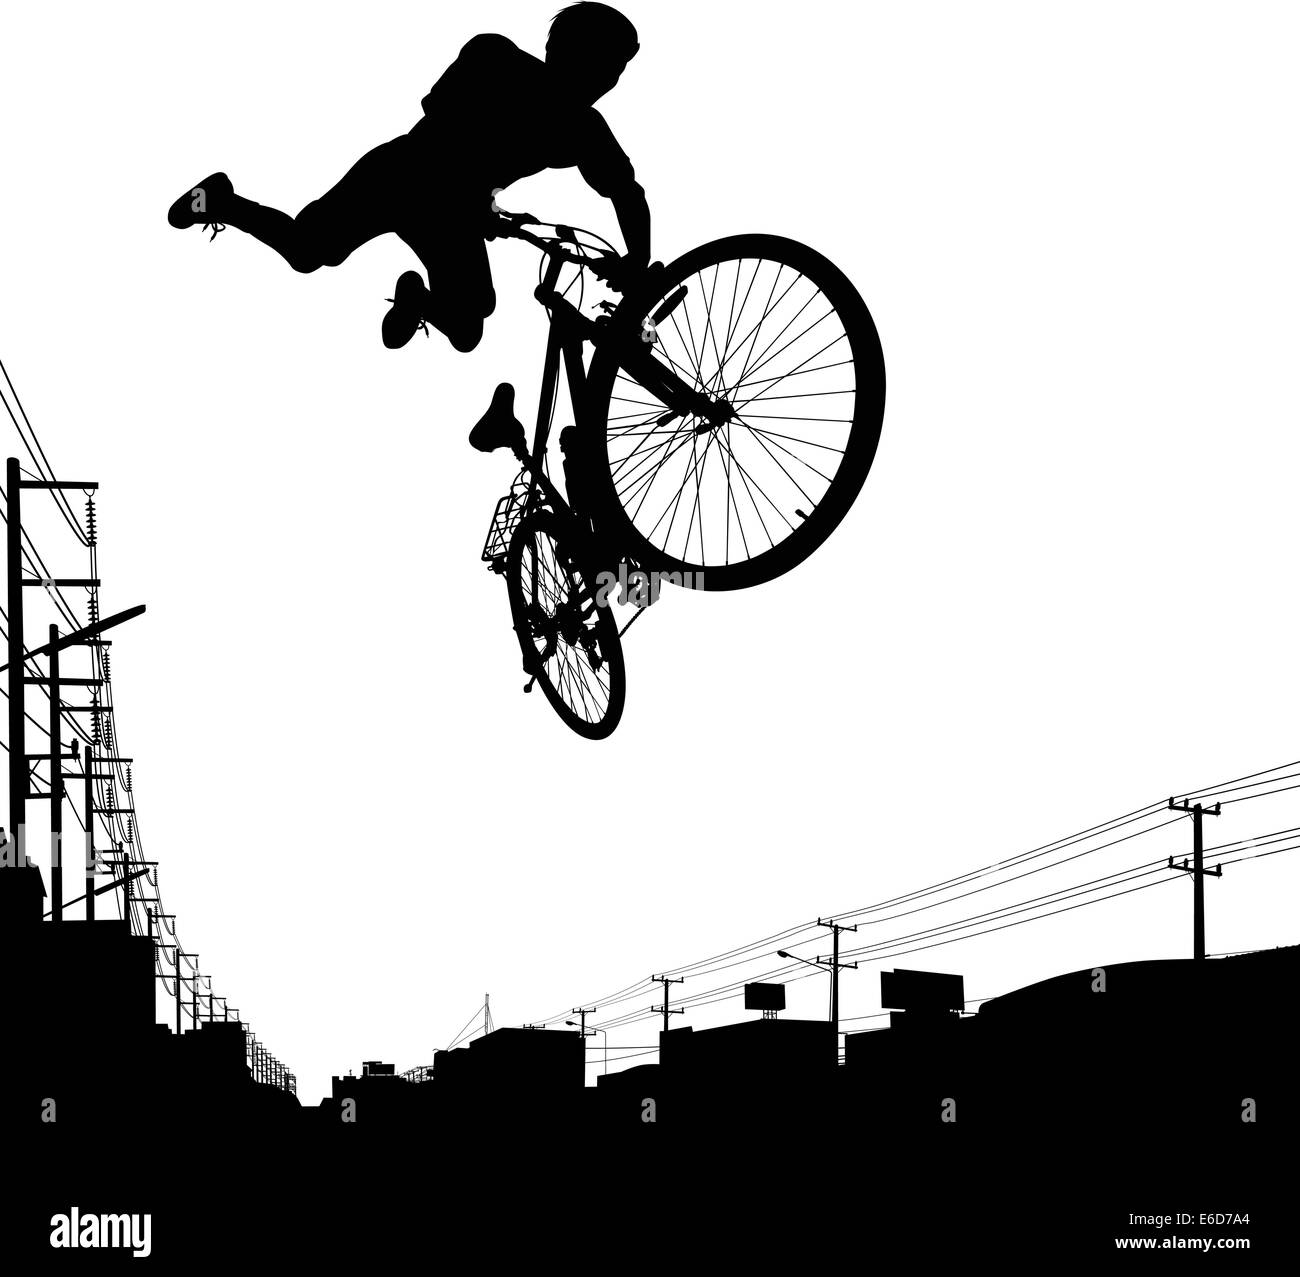 Vektor-Illustration eines jungen mit seinem Fahrrad springen Stock Vektor